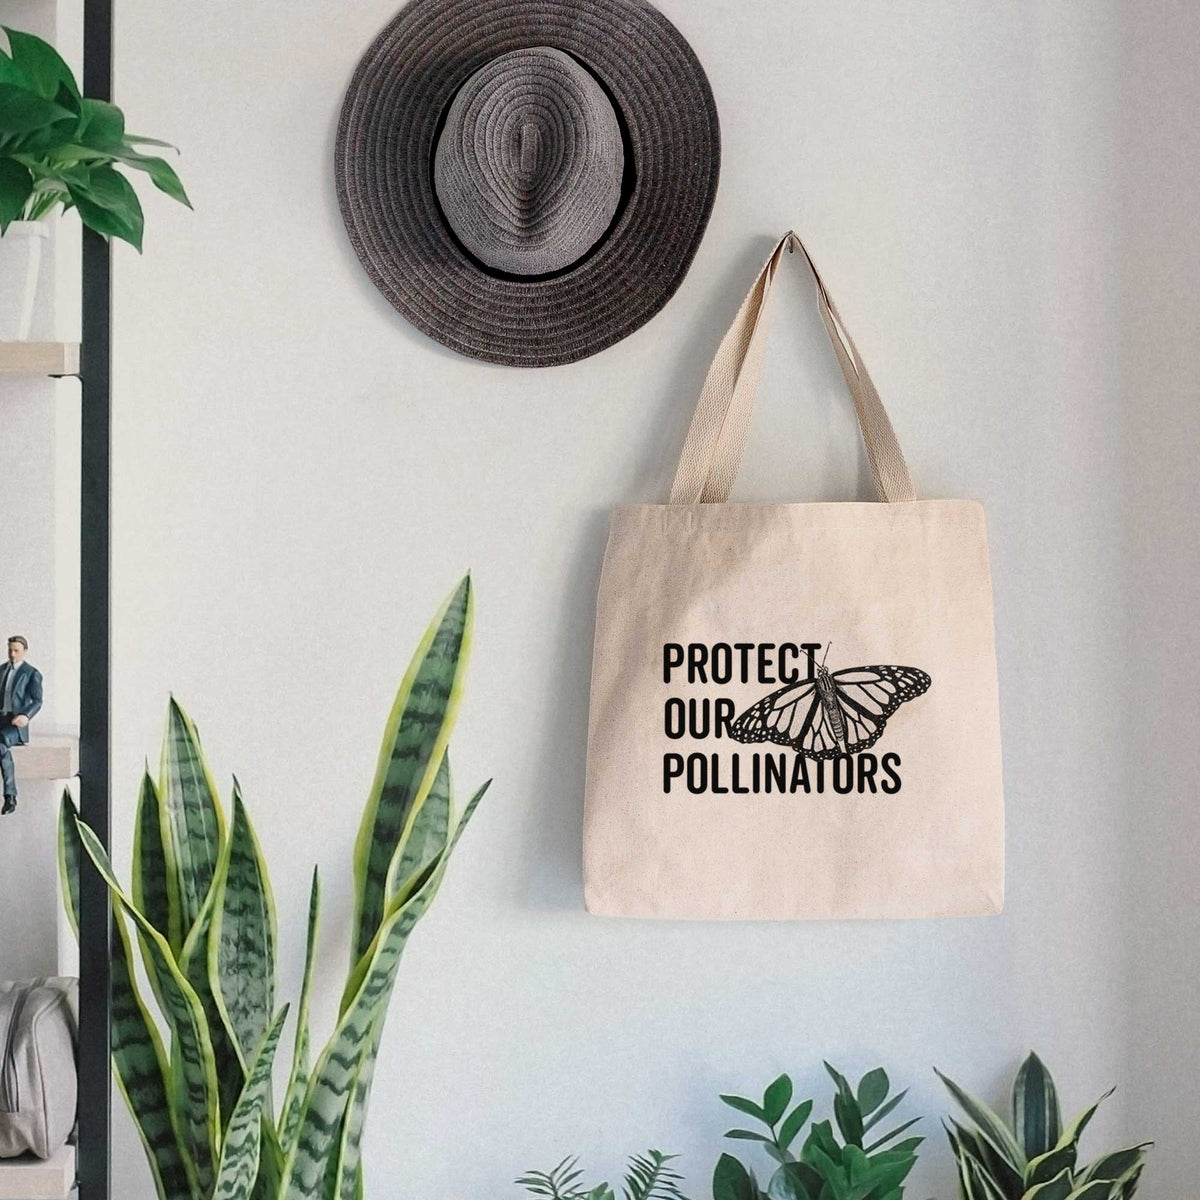 Protect our Pollinators - Tote Bag